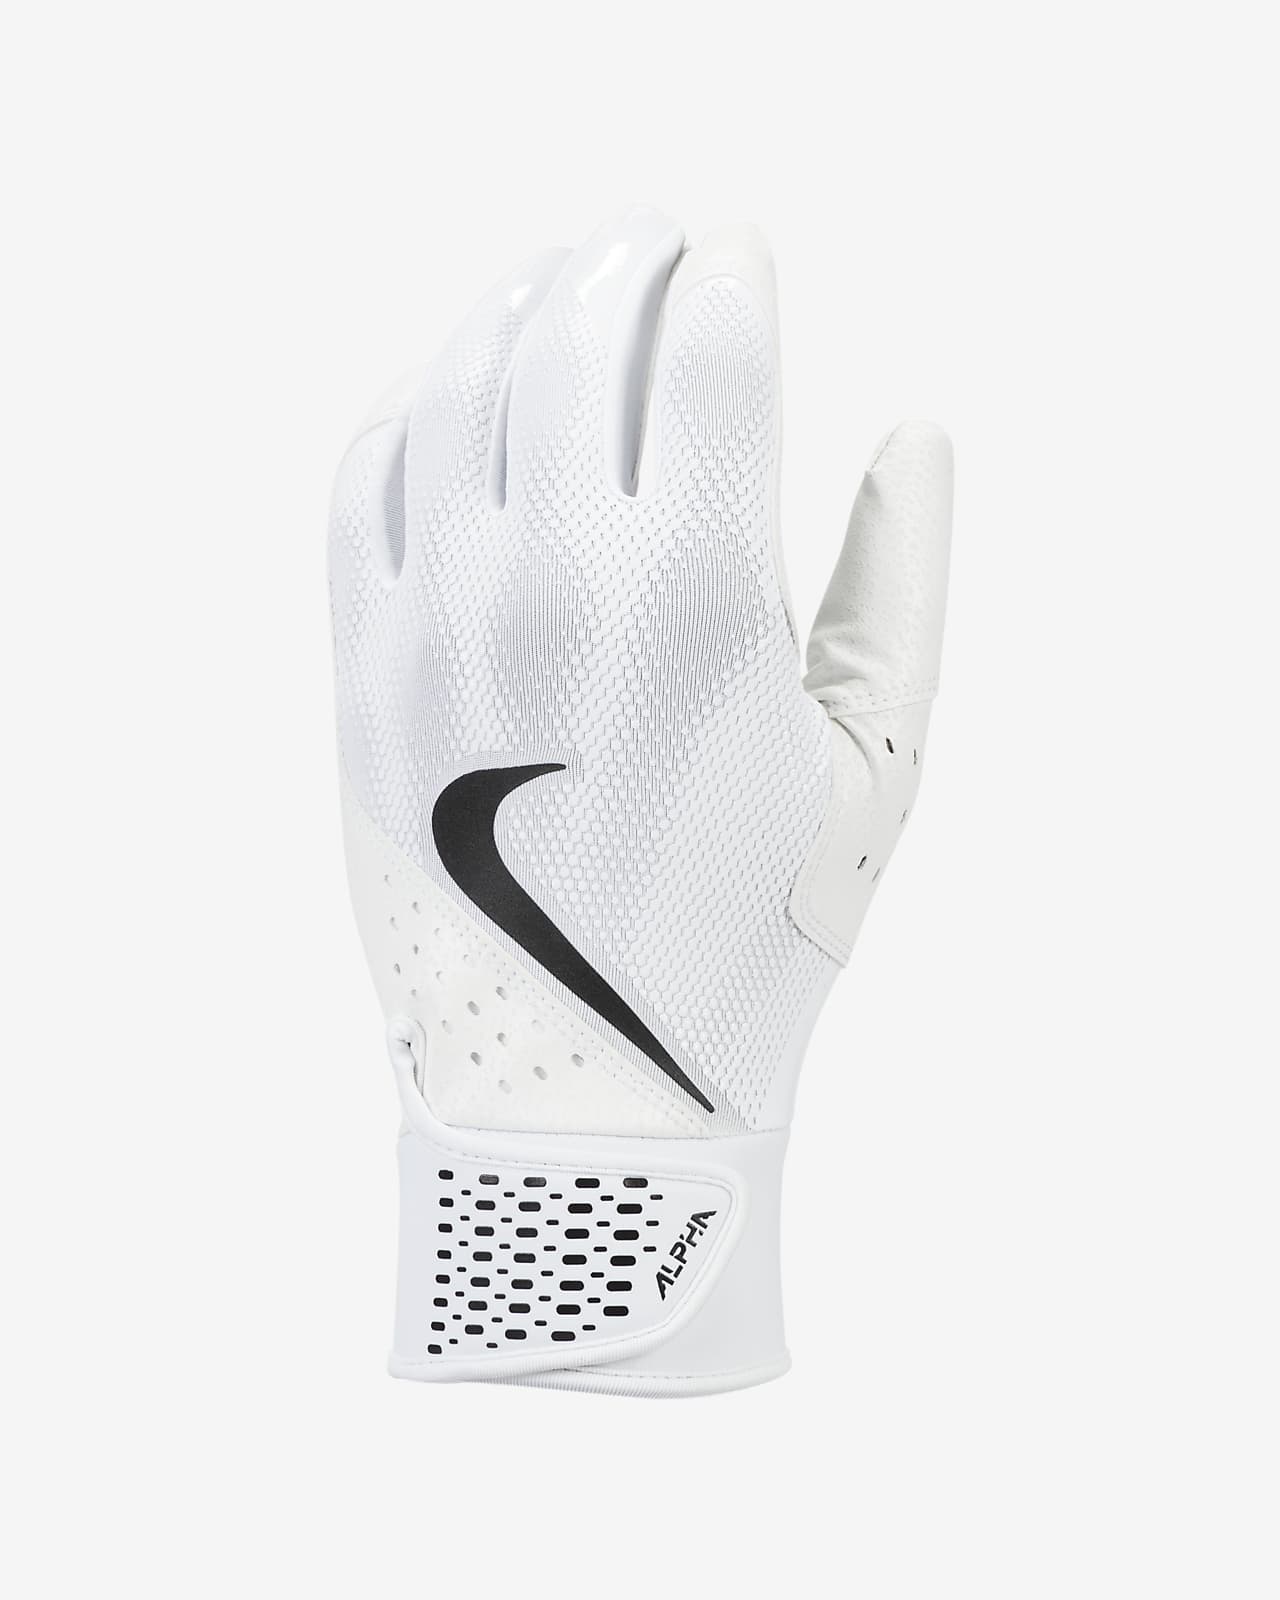 Nike Alpha Baseball Batting Gloves